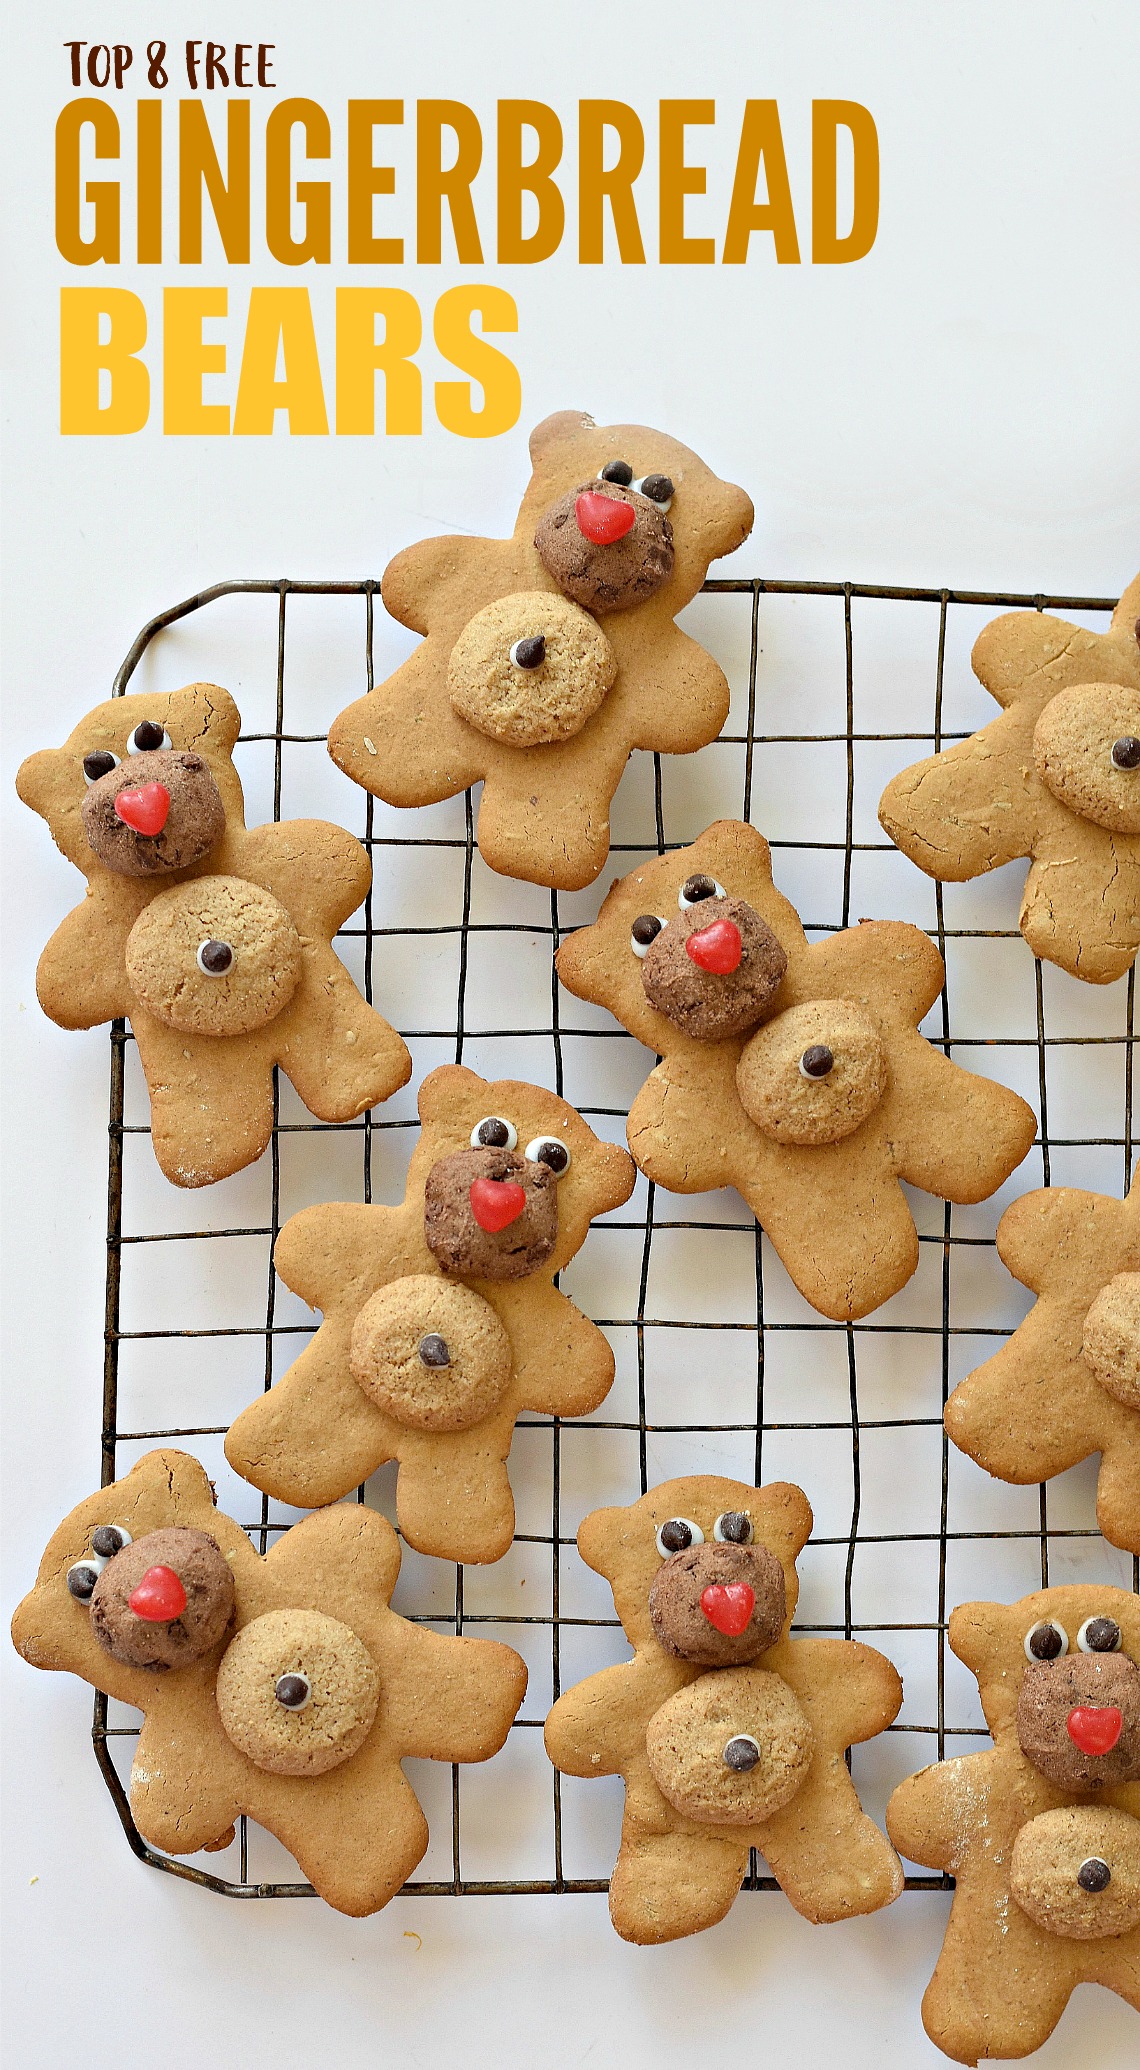 Top 8 Free Gingerbread Bears